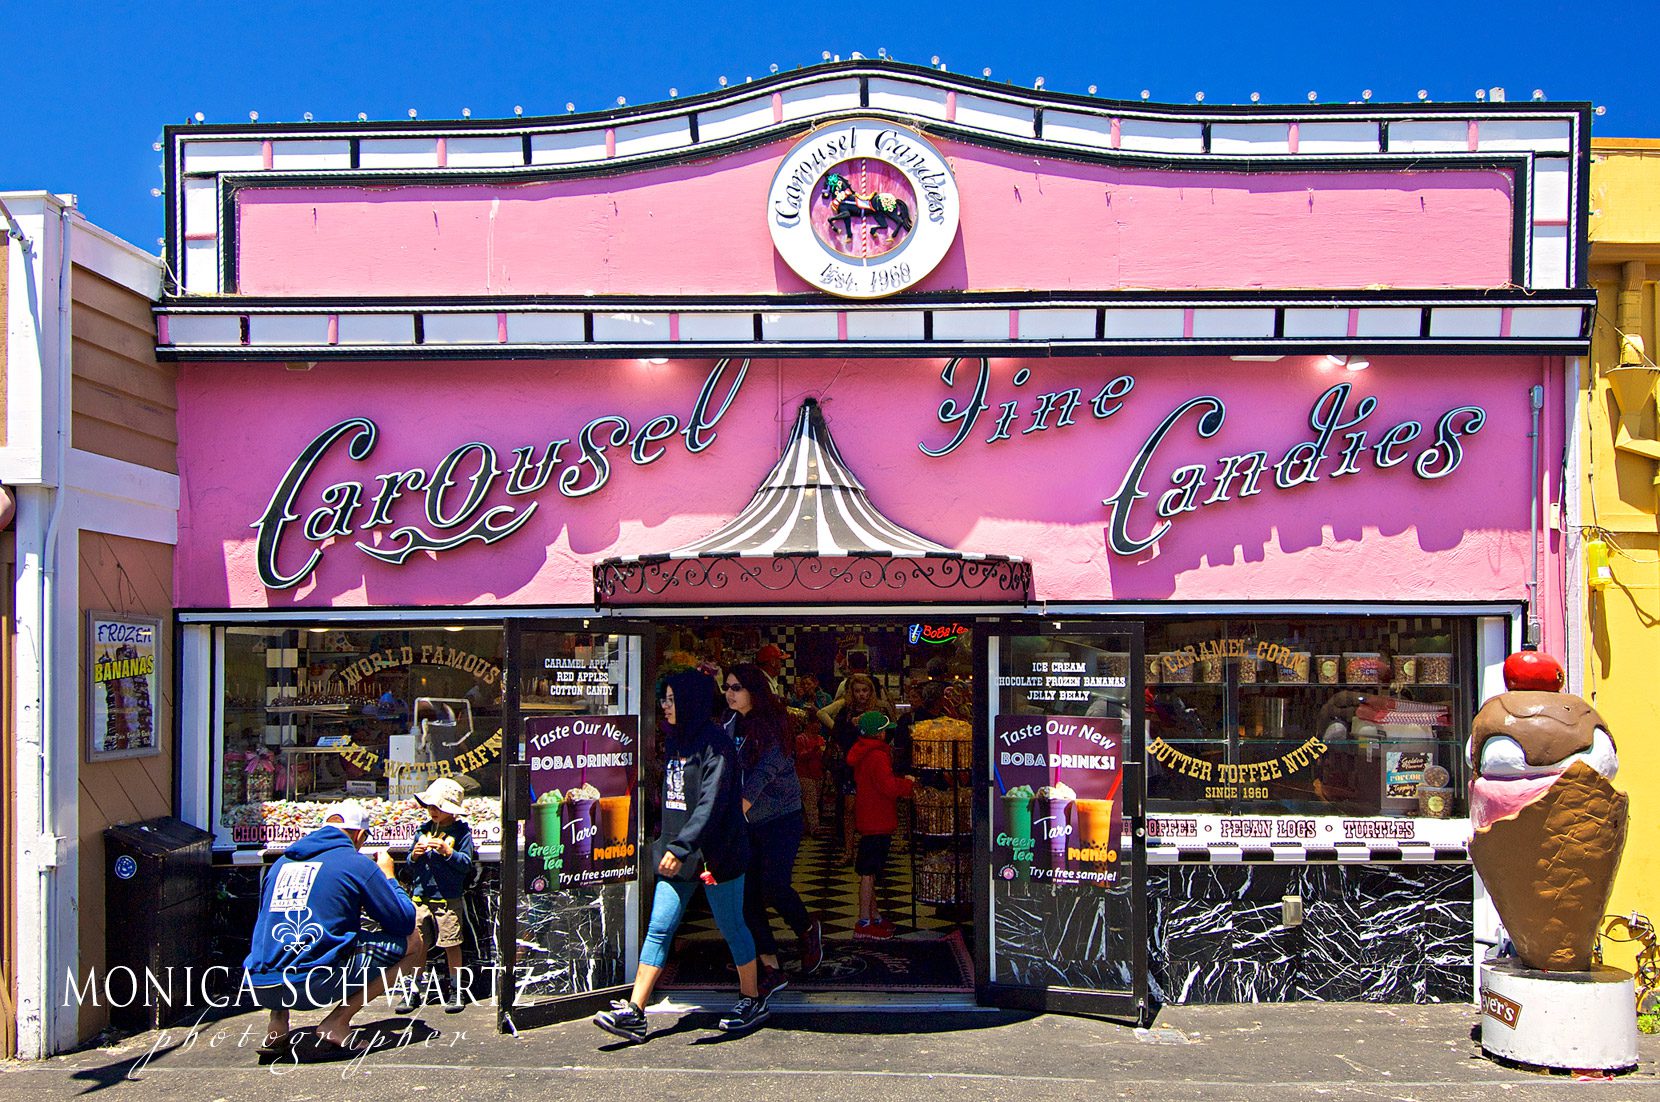 Carousel-Fine-Candies-shop-at-Fisherman-Wharf-in-Monterey-California